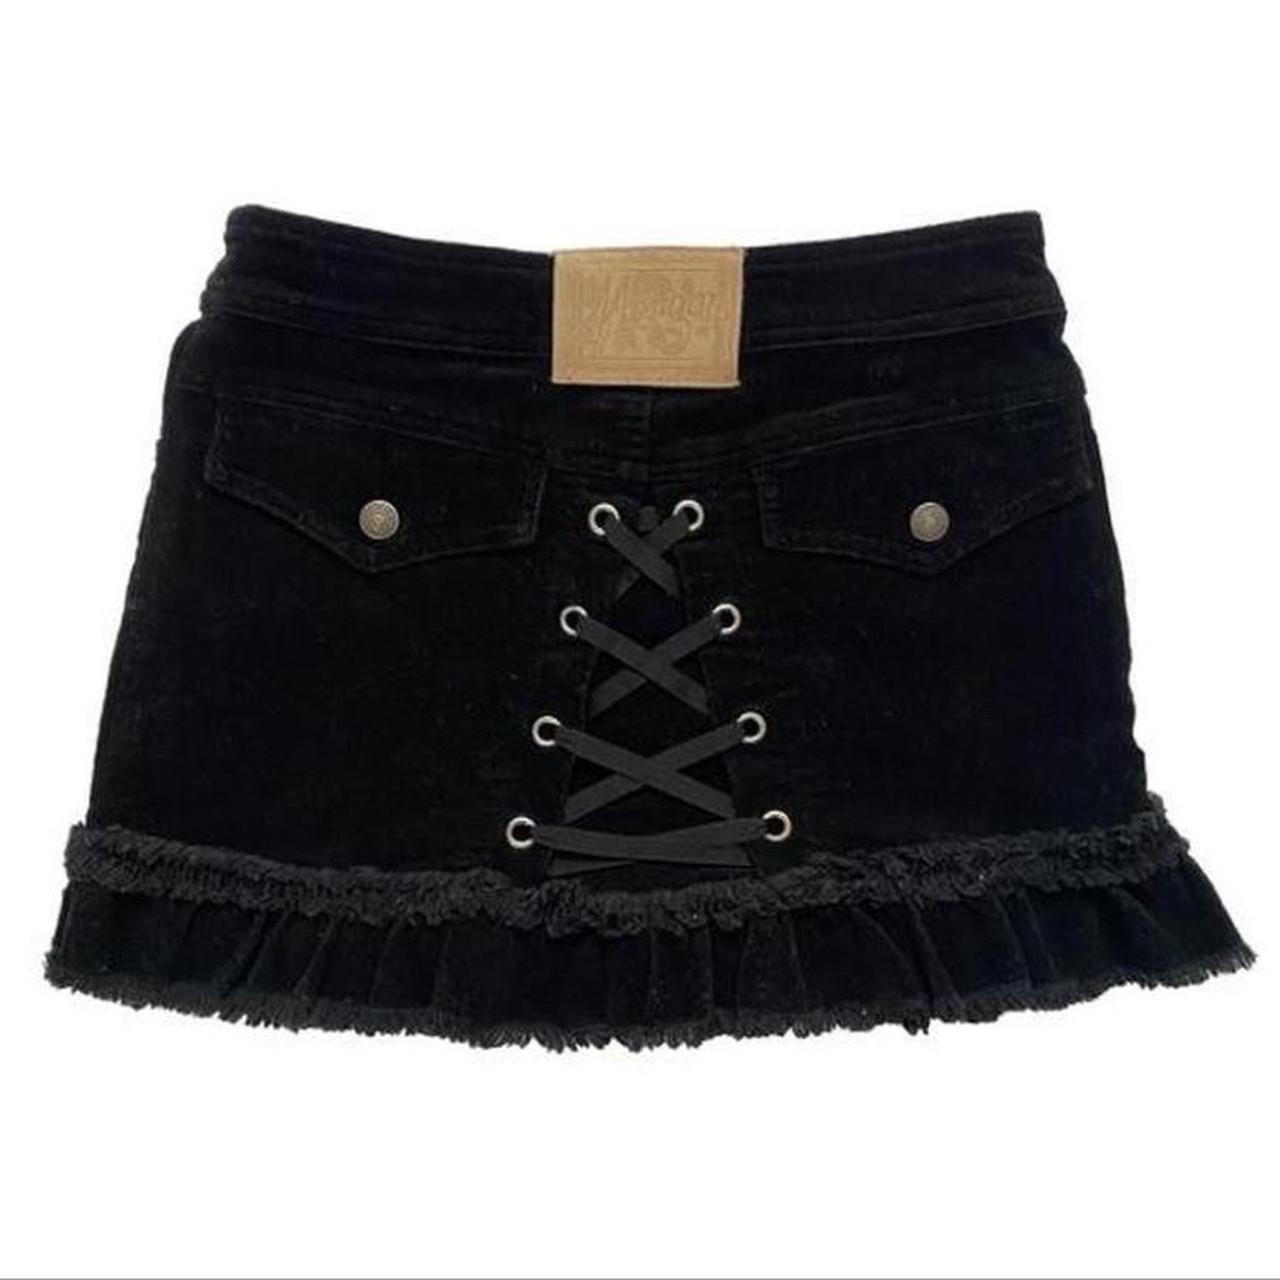 Corset lace up black corduroy mini skirt Fits waist... - Depop